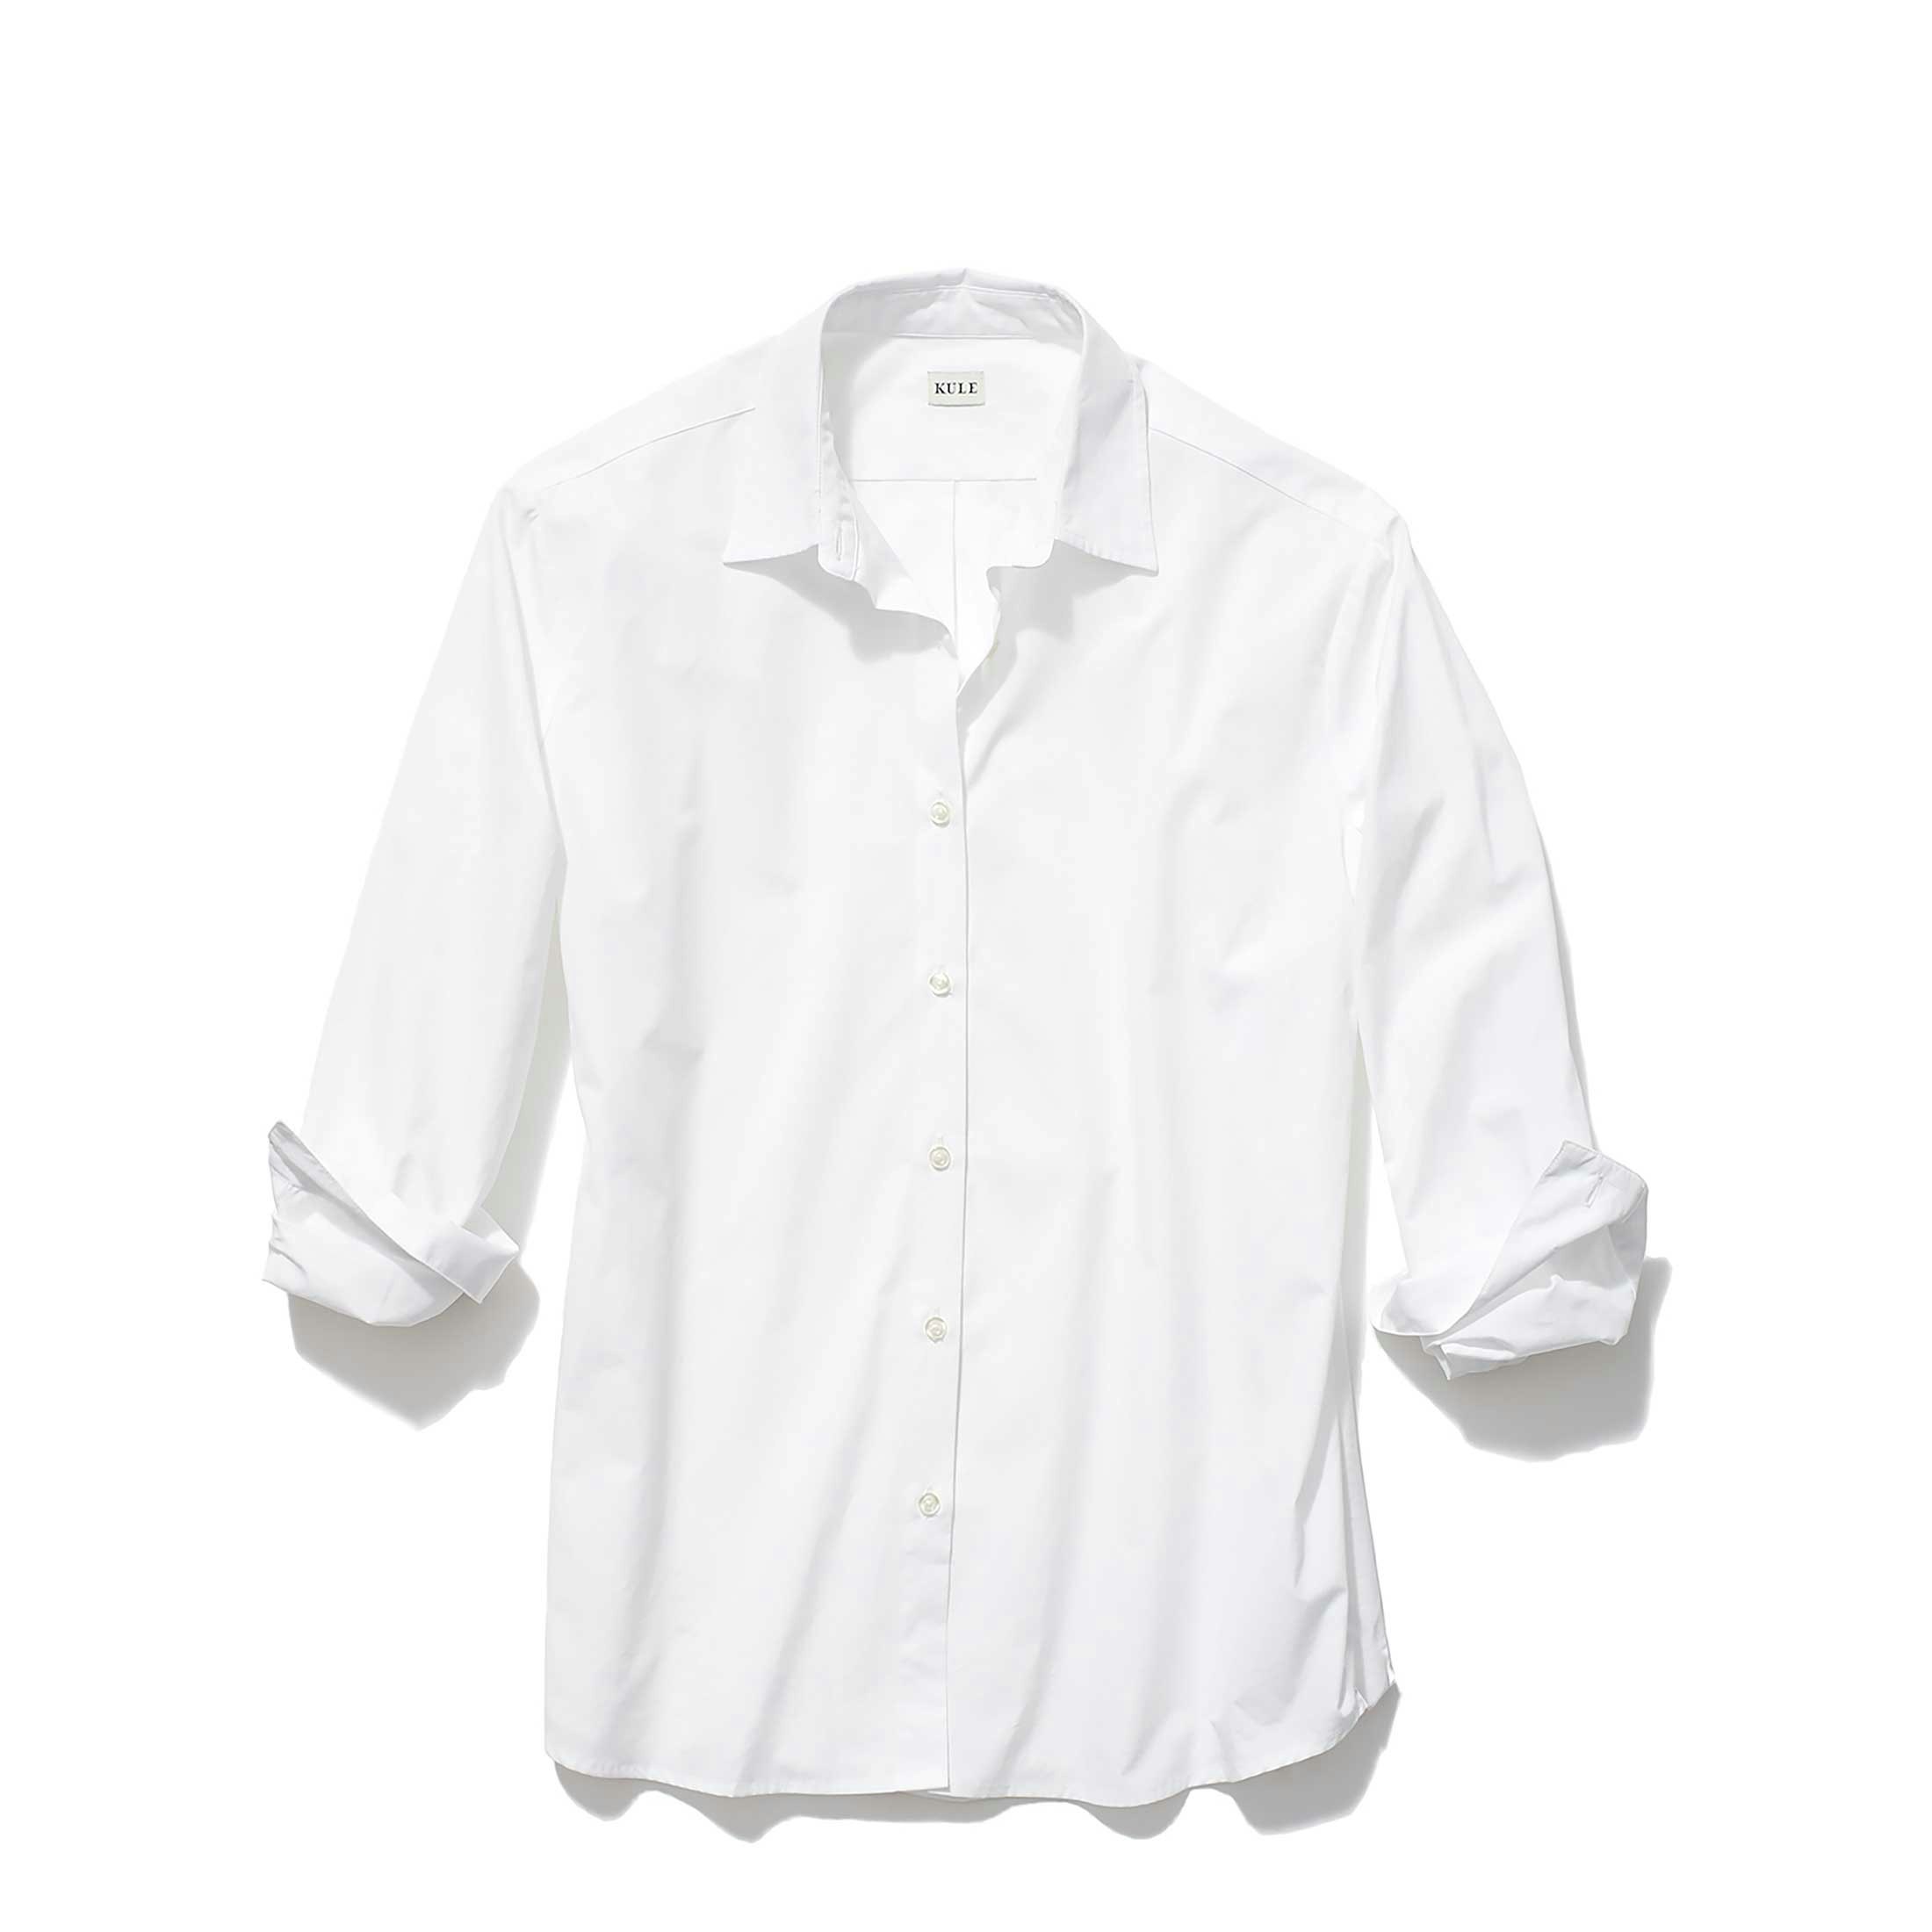 dress shirt white